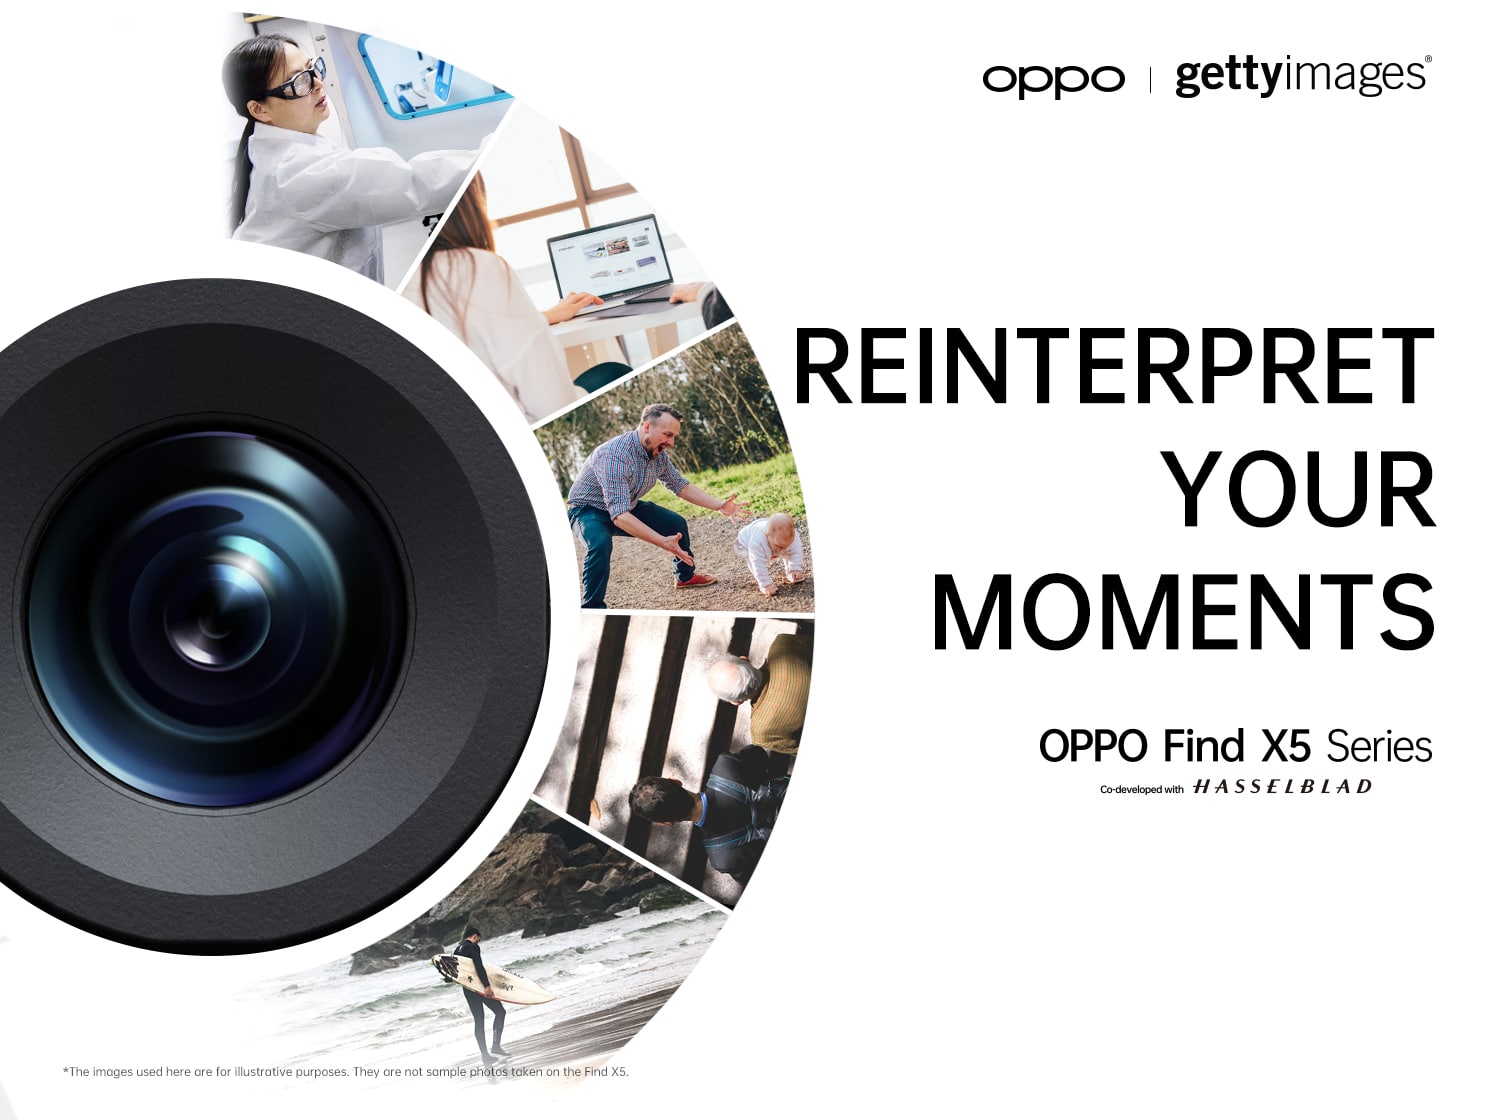 OPPO e Getty Images insieme per il progetto Reinterpret Your Moment thumbnail